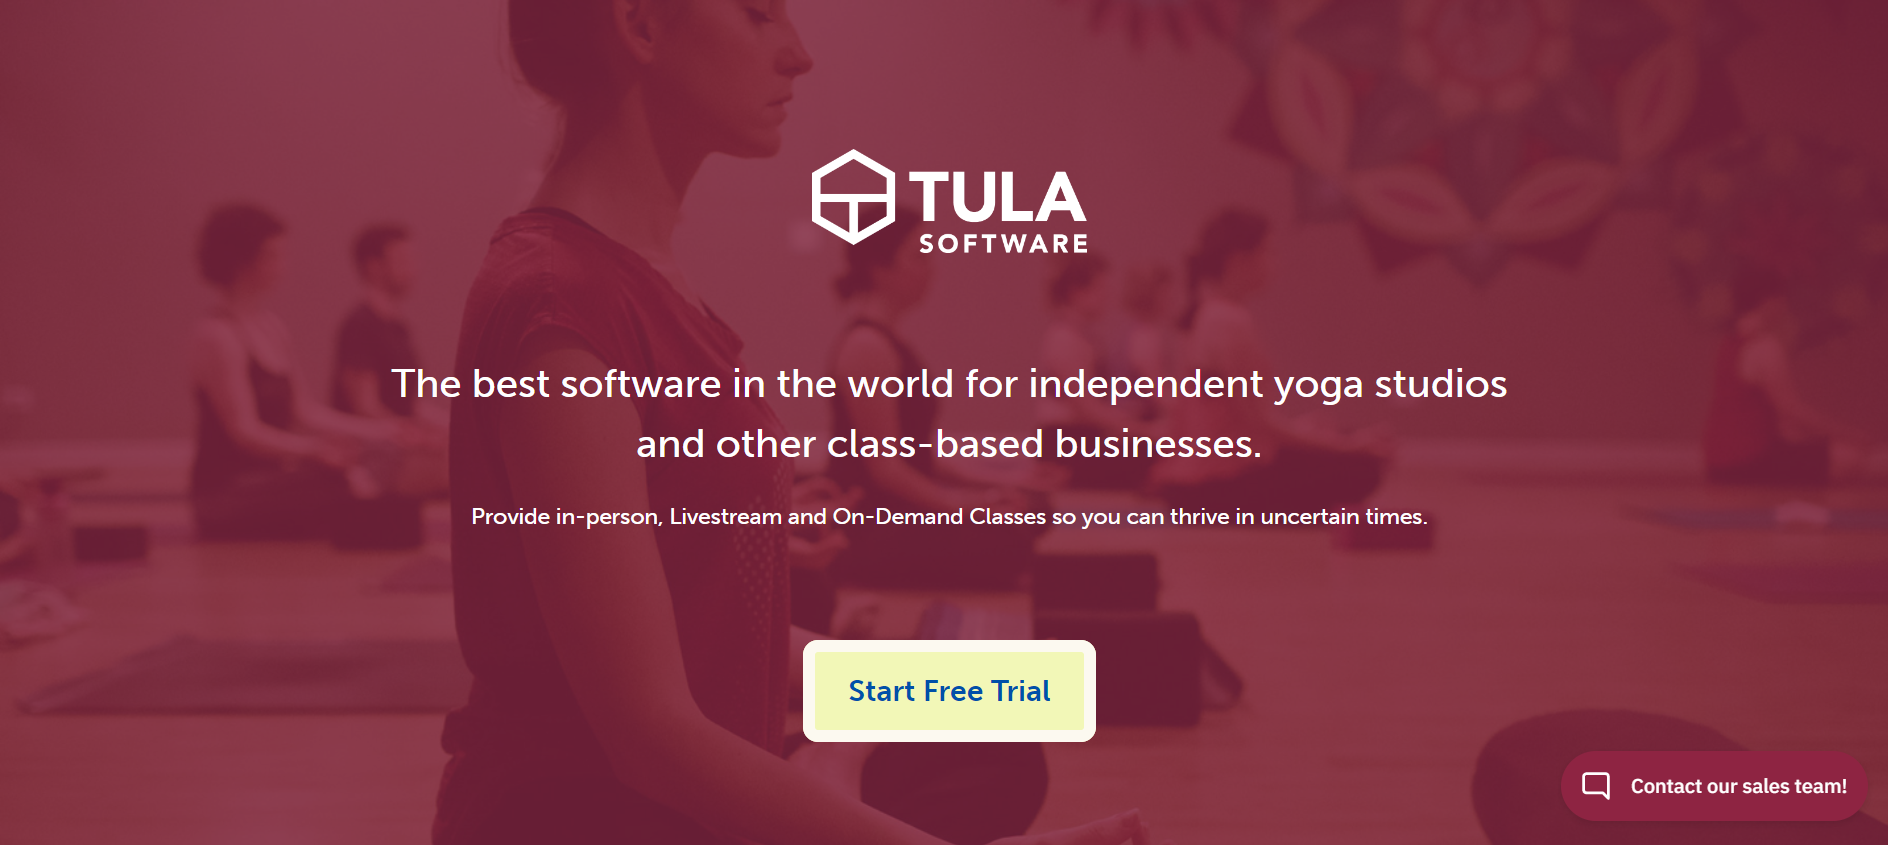 Tula Yoga Software